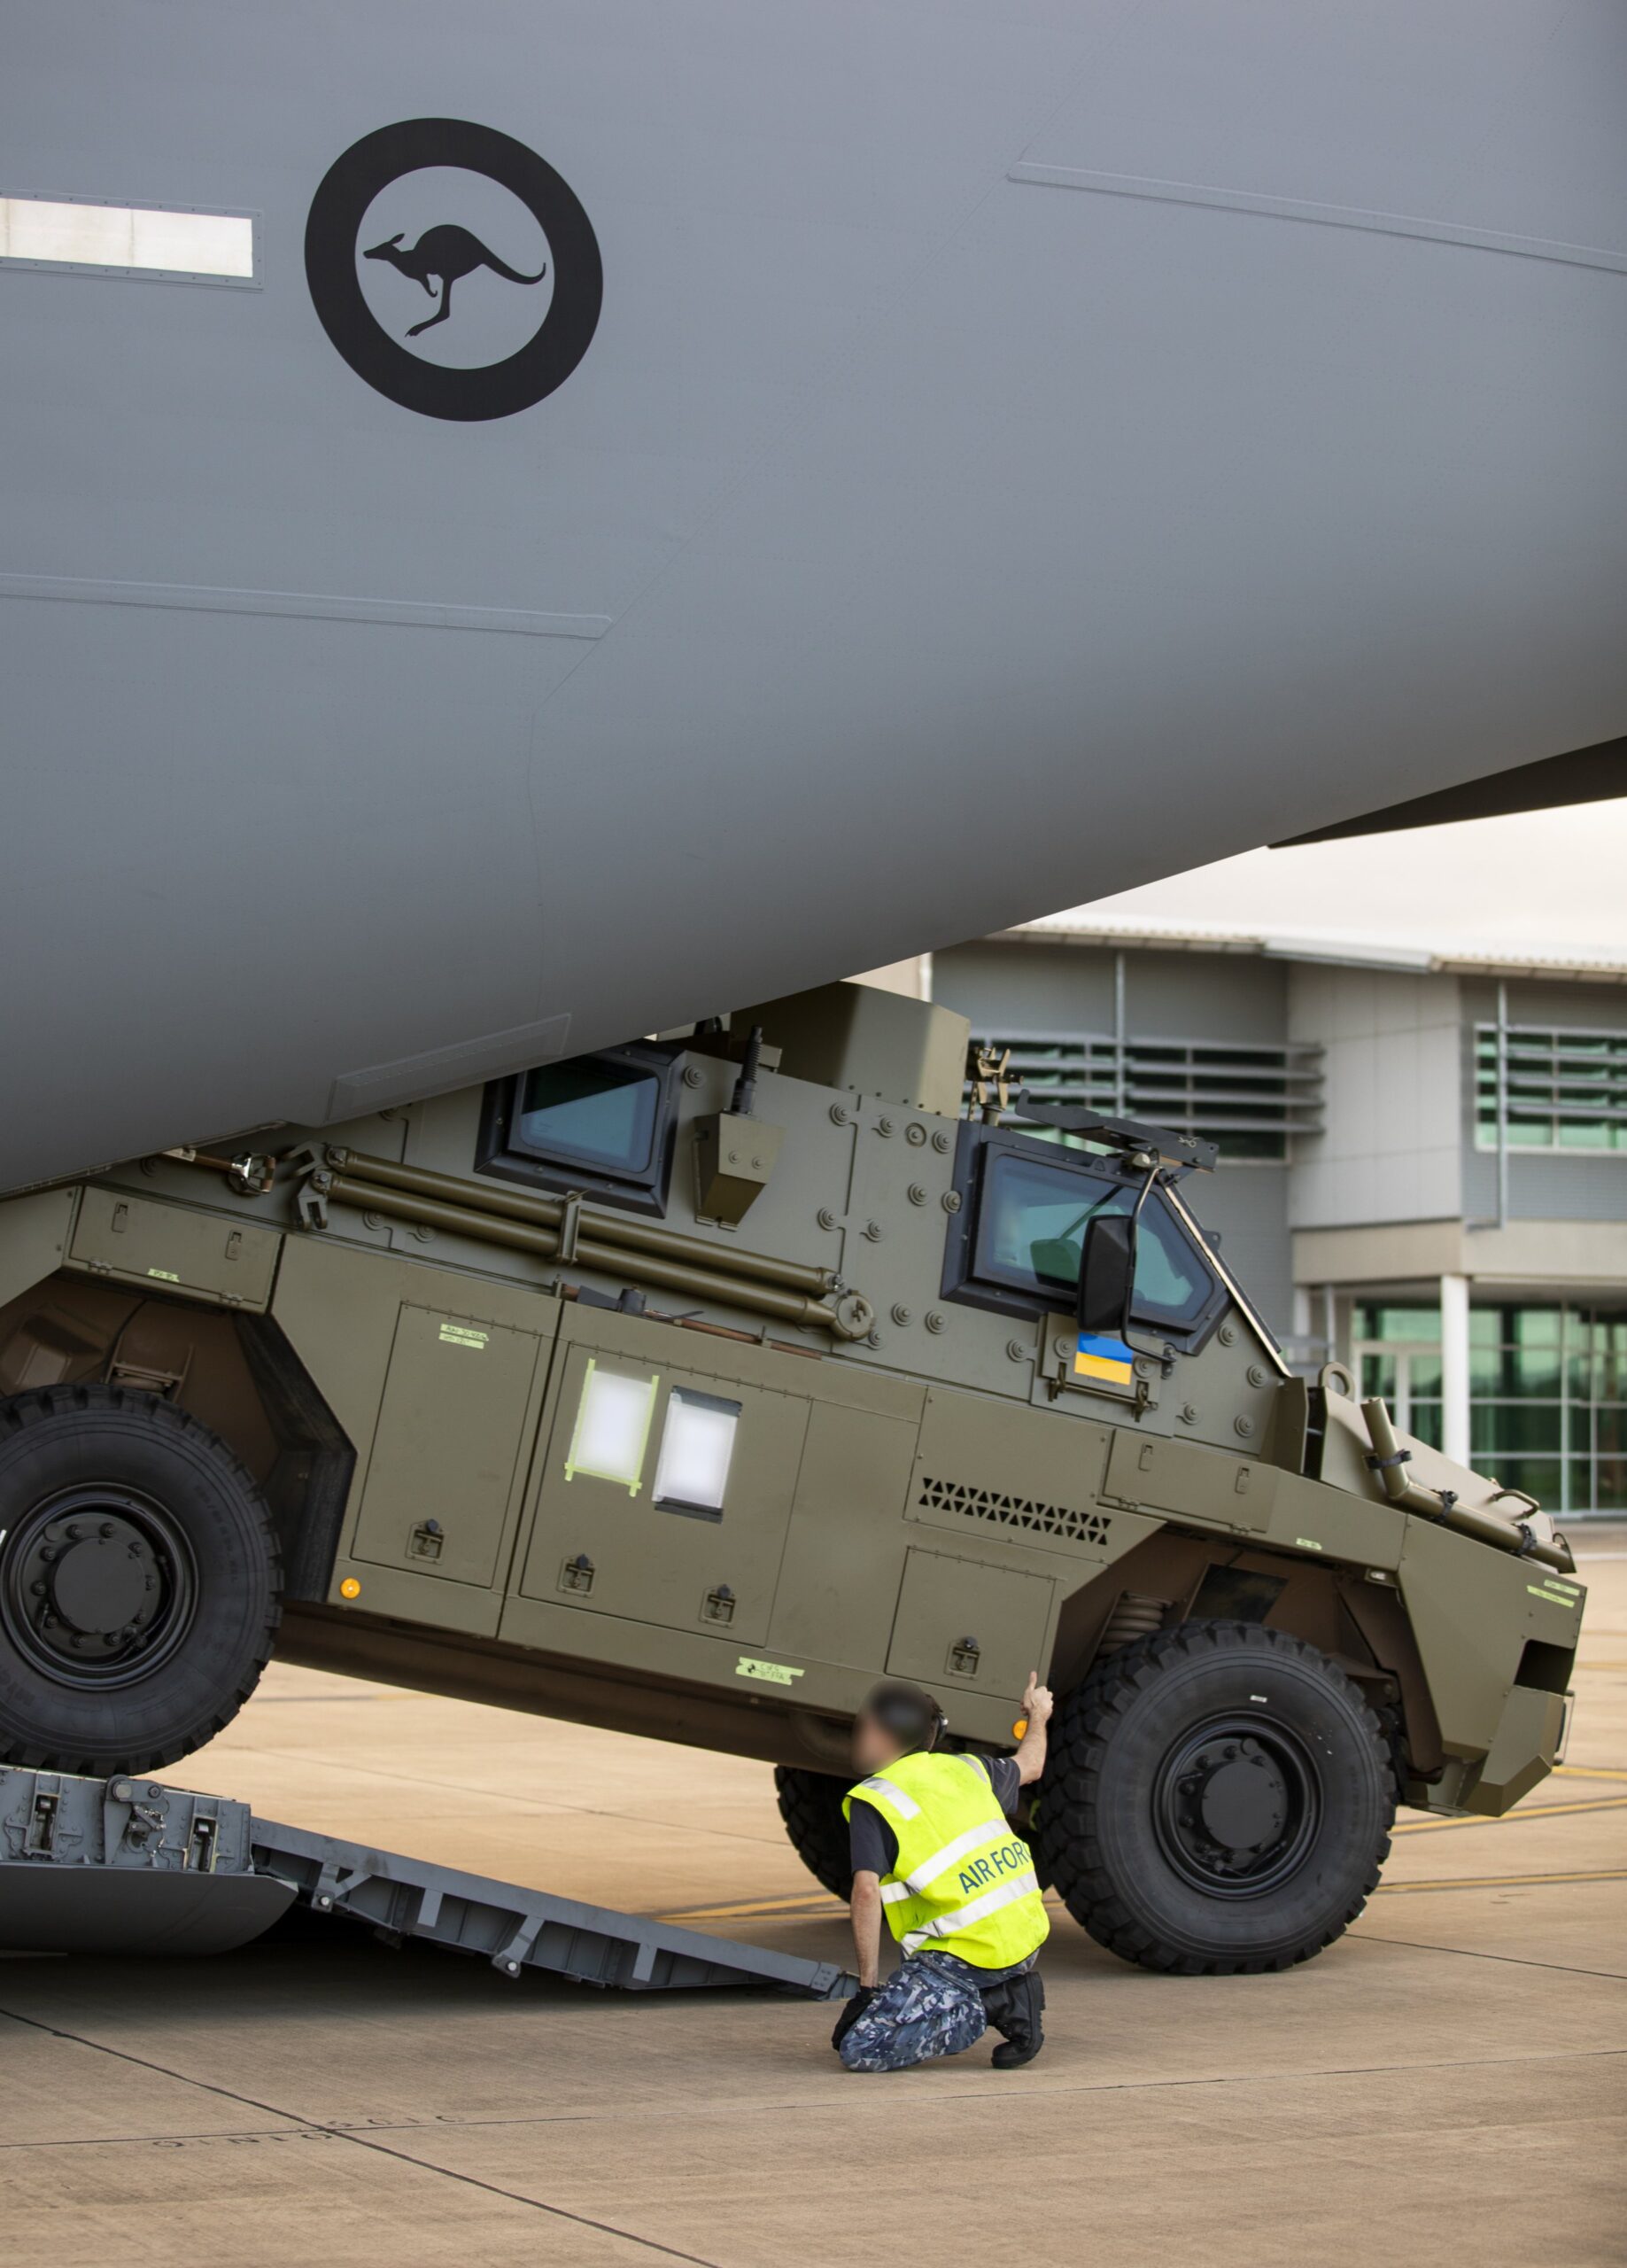 Australia is sending 20 armored vehicles to Ukraine